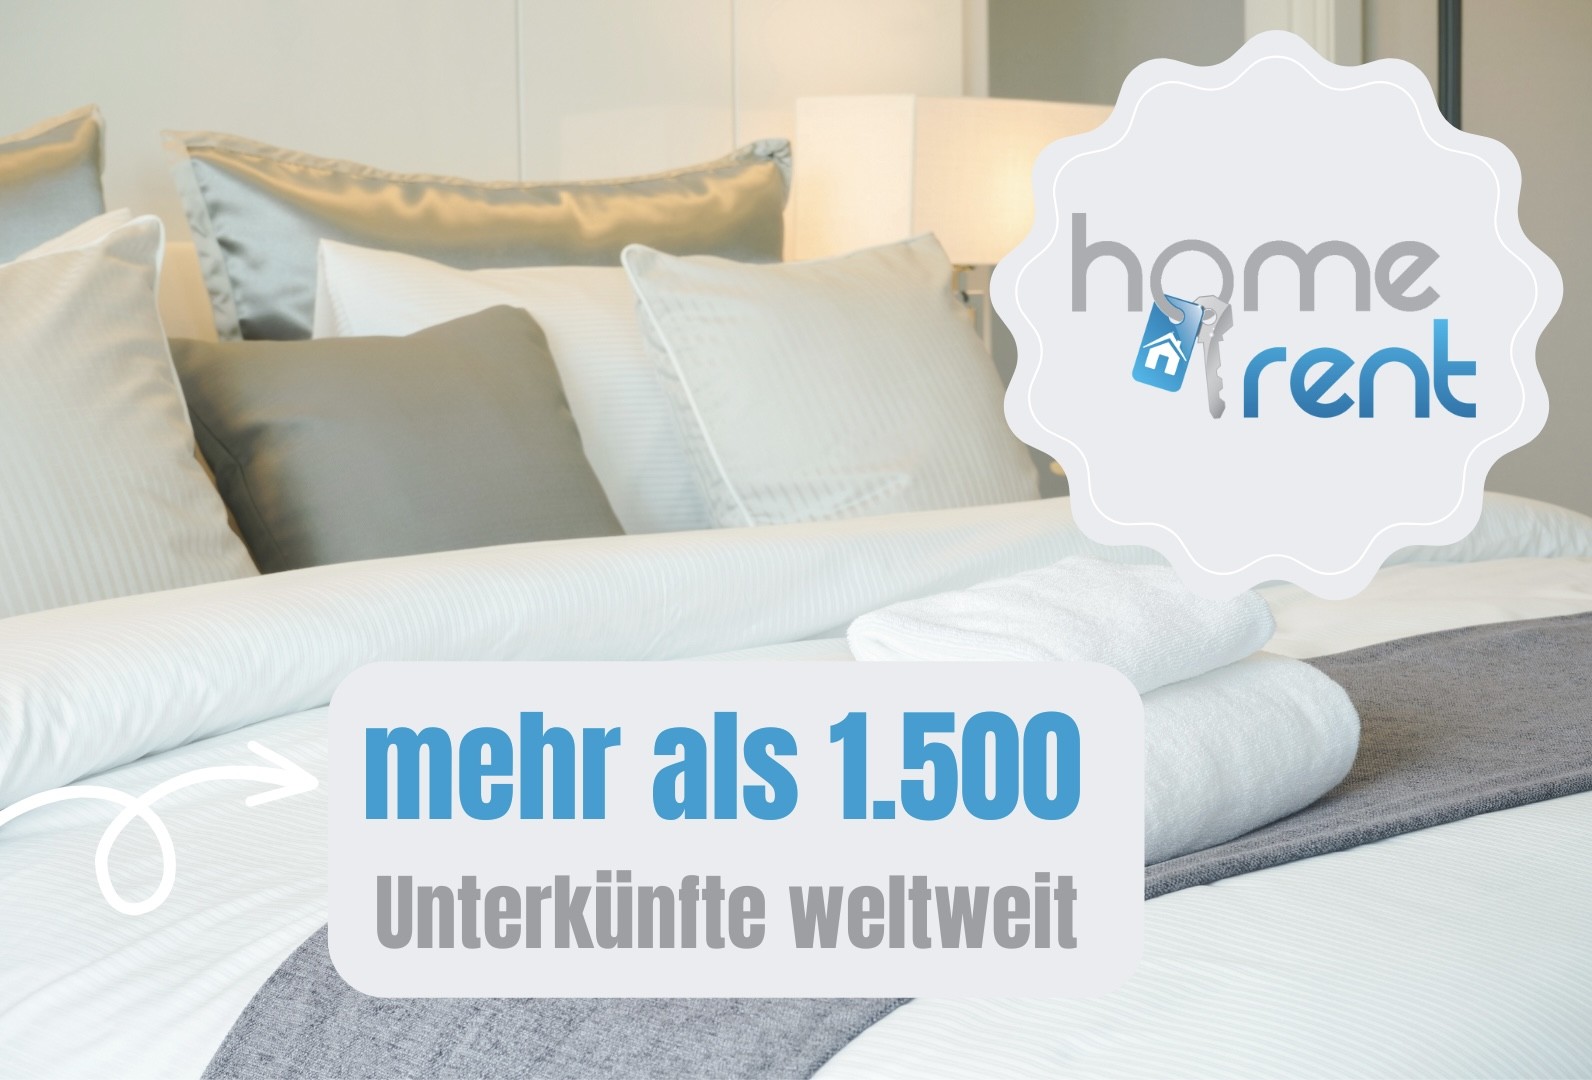 Monteurunterkunft HomeRent in Magdeburg und Umgebung Homerent Immobilien GmbH 39104 1714985563_66389a5b3dc6f